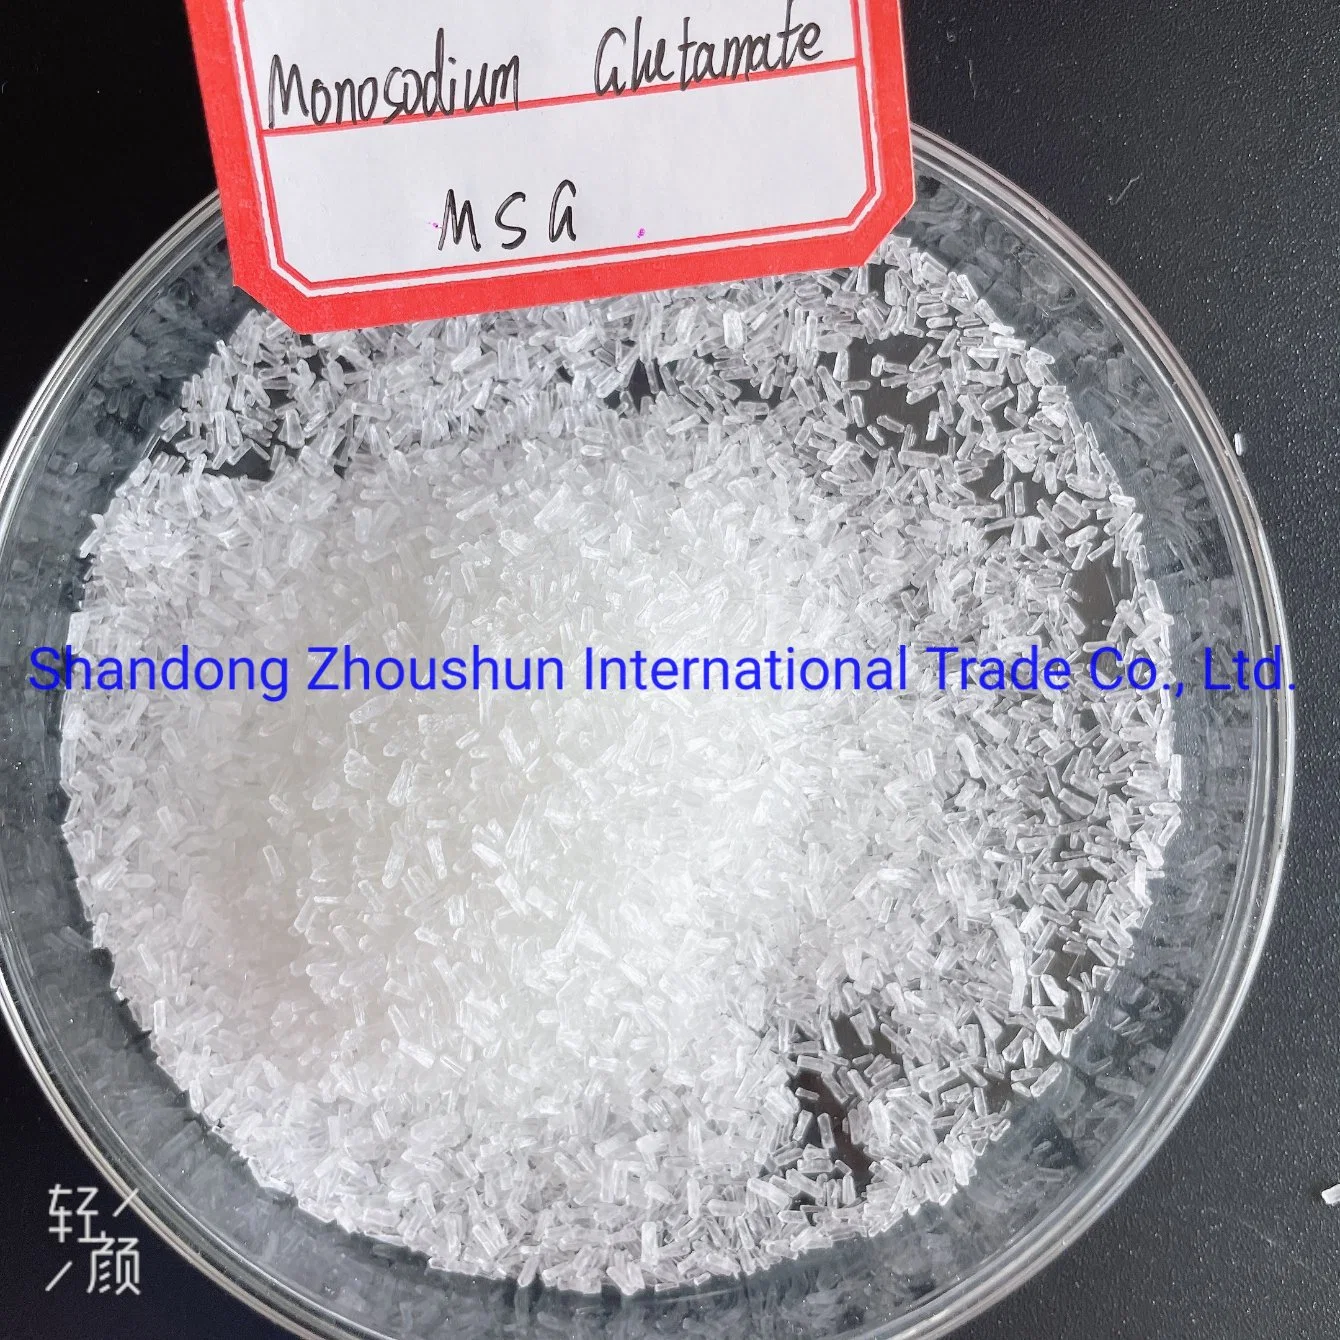 Condiment Seasoning China Fufeng Monosodium Glutamate Msg 99% Price Used in Food Additive